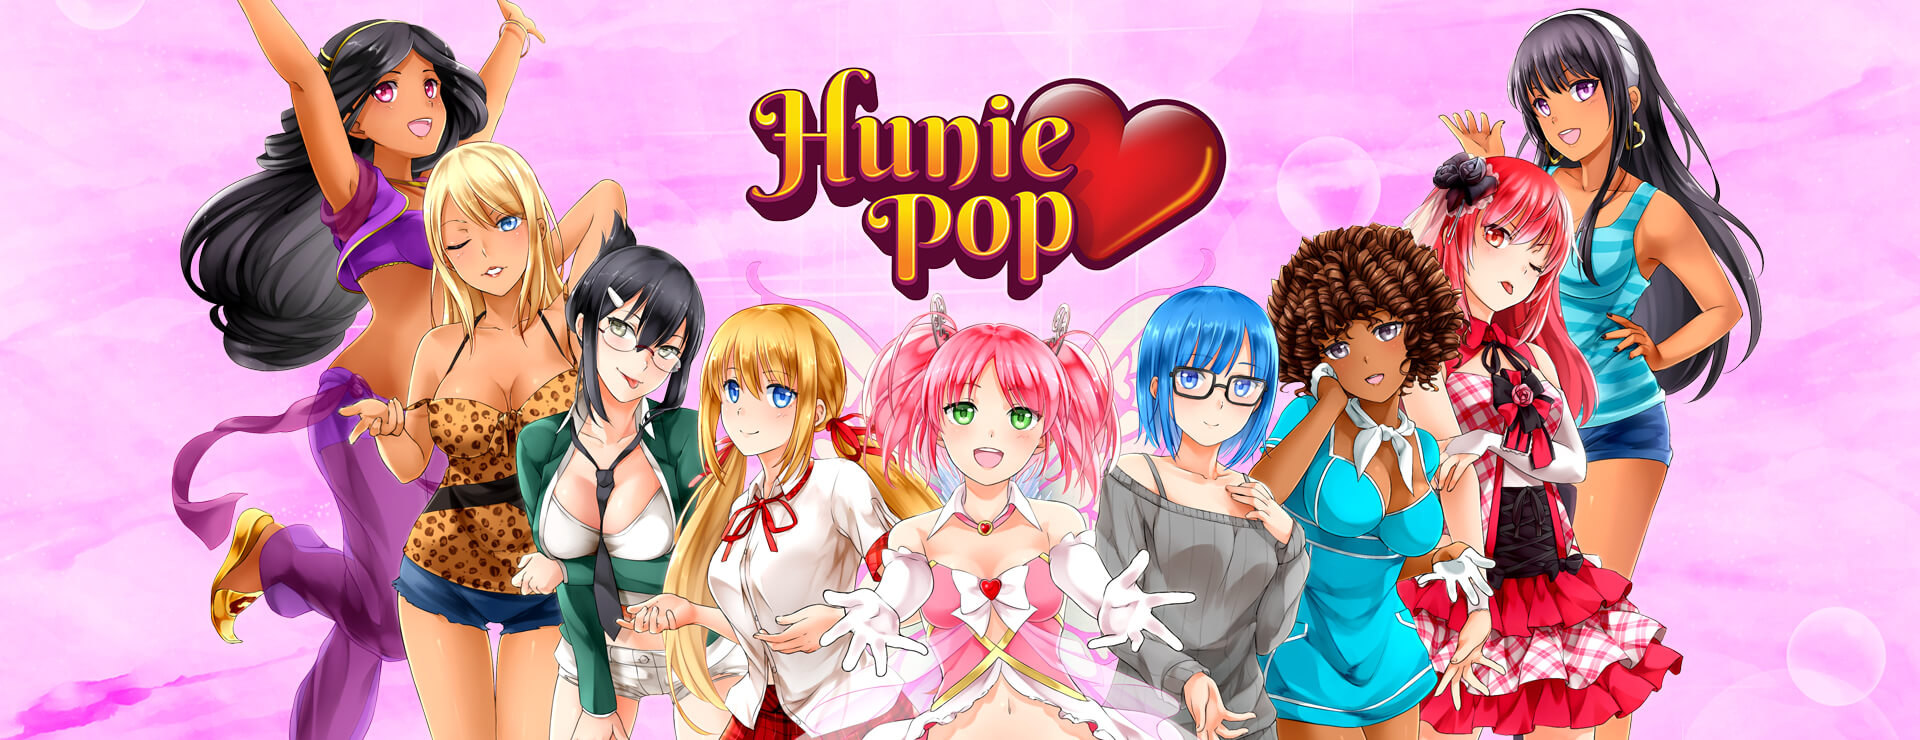 Huniepop free download mac. cramper.tealarmor.us. 